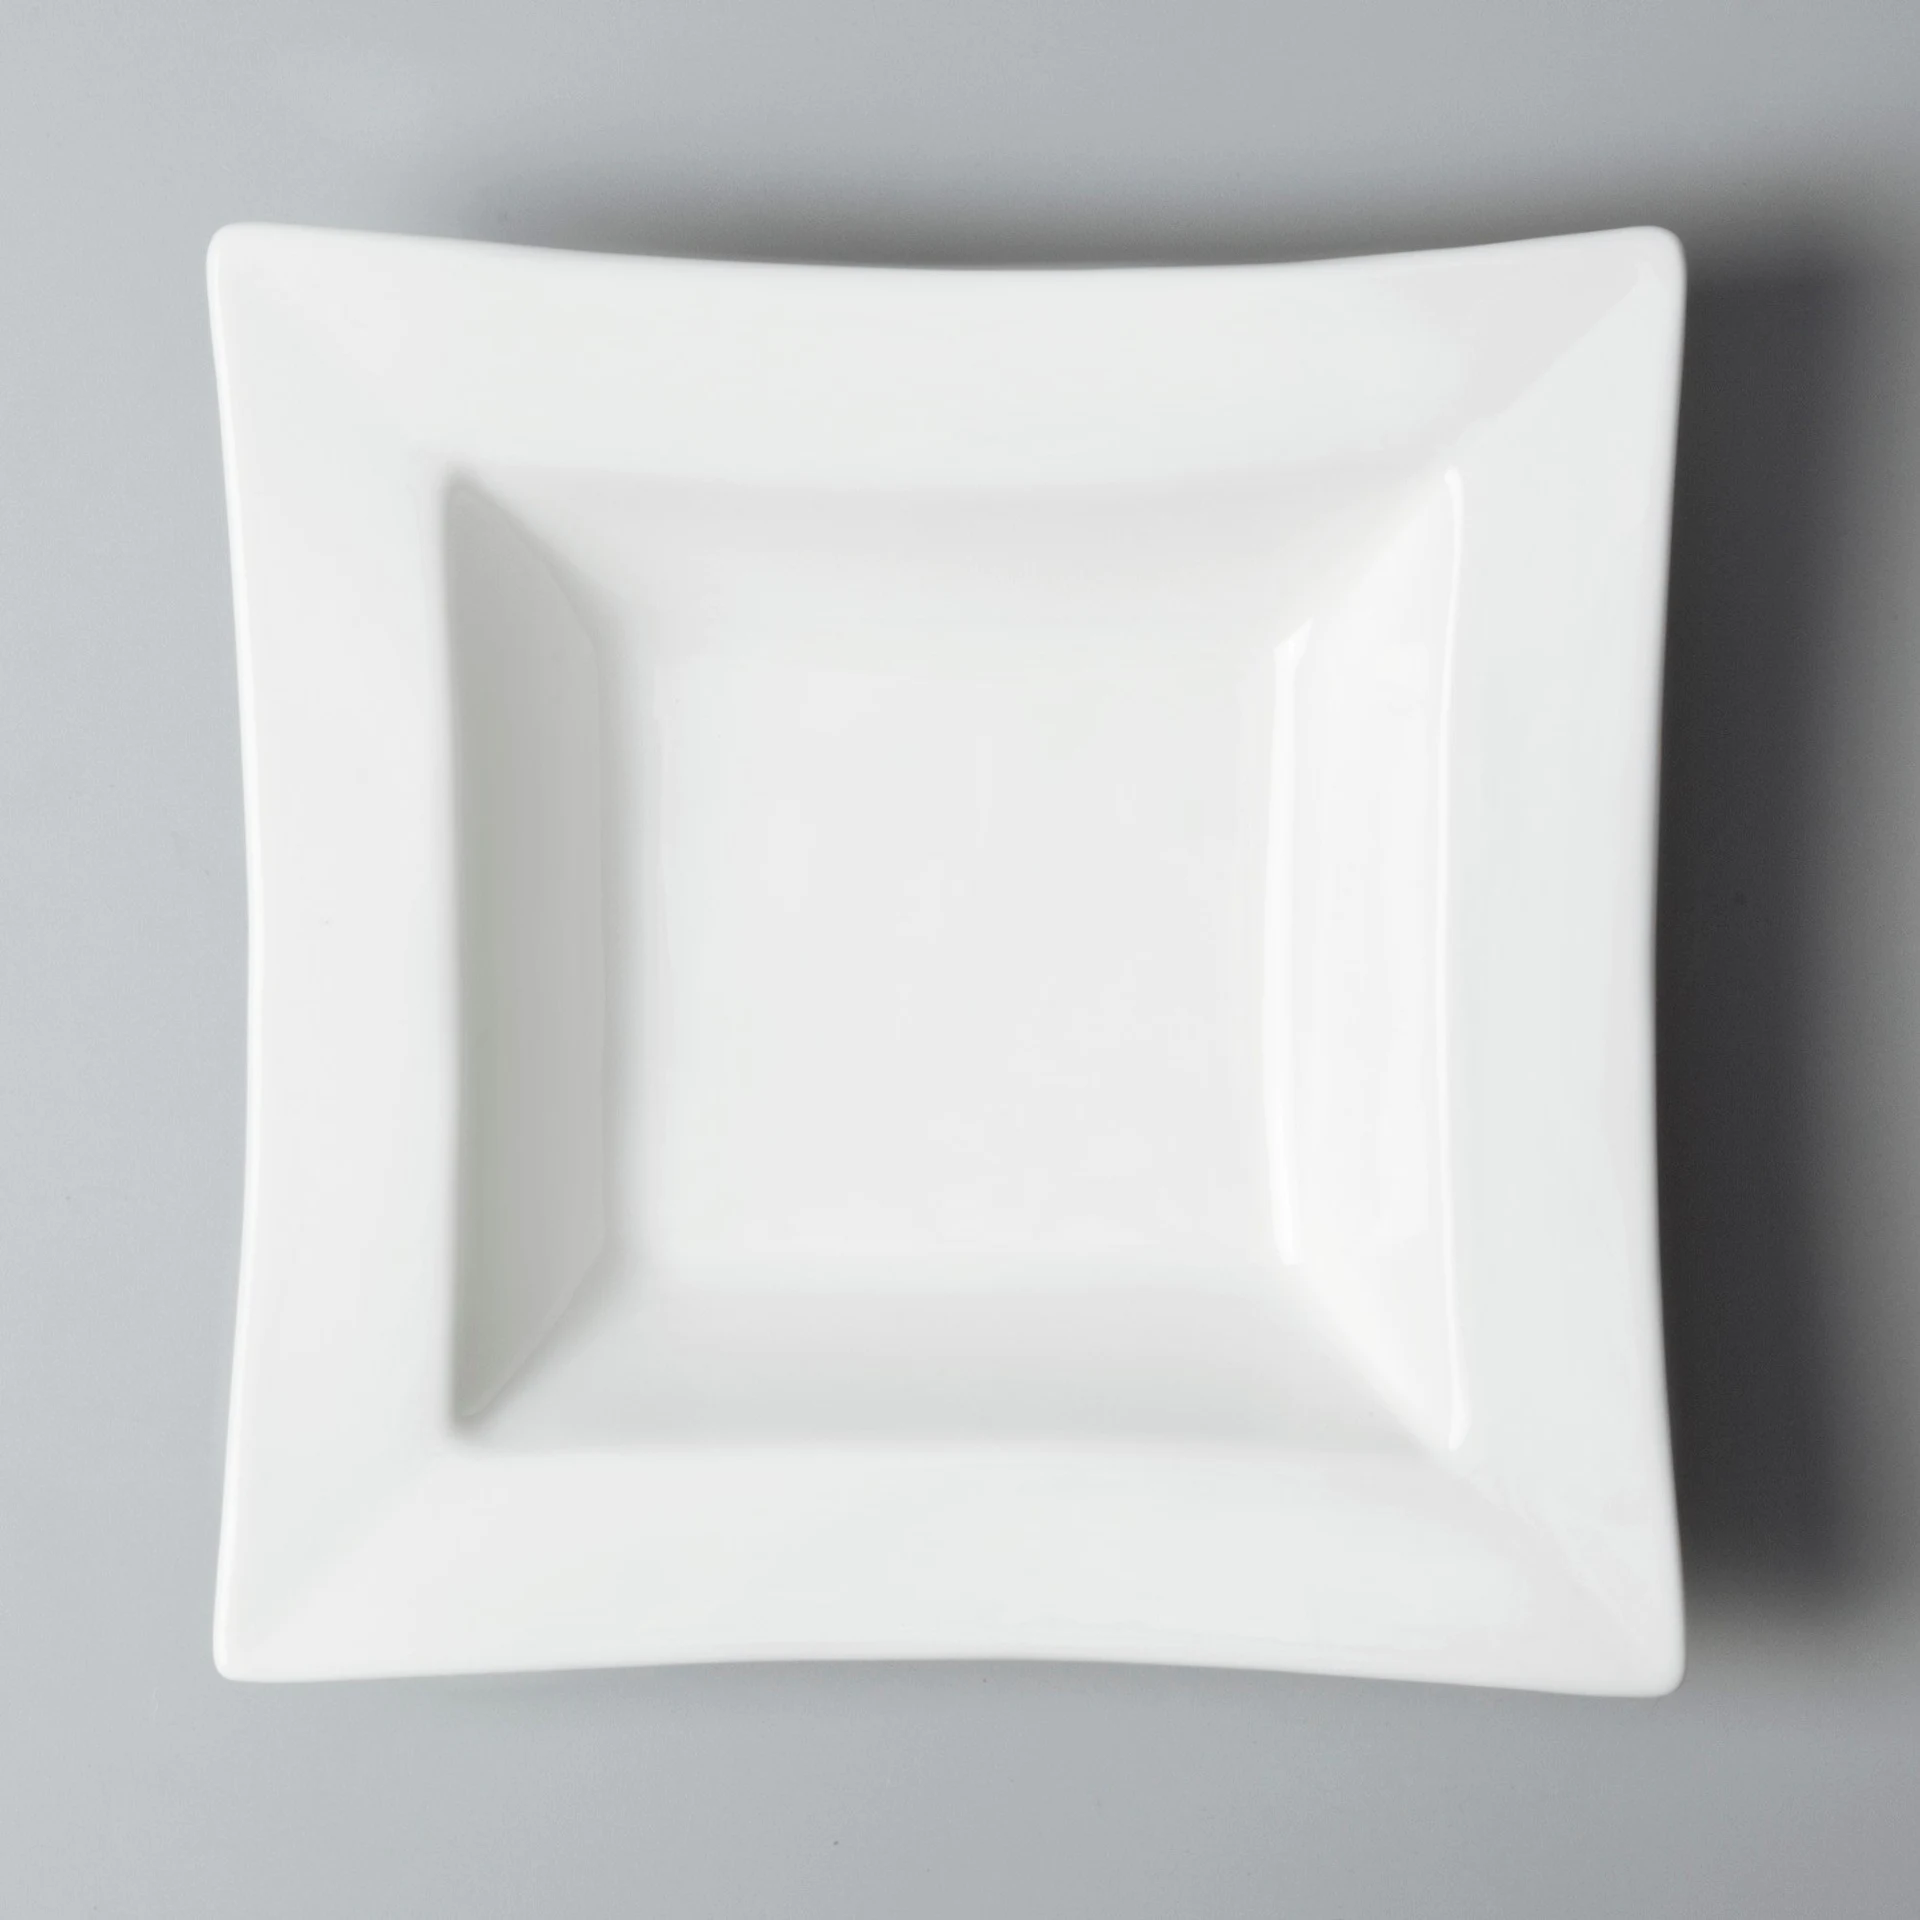 Two Eight Brand quan fashion white porcelain tableware wang supplier